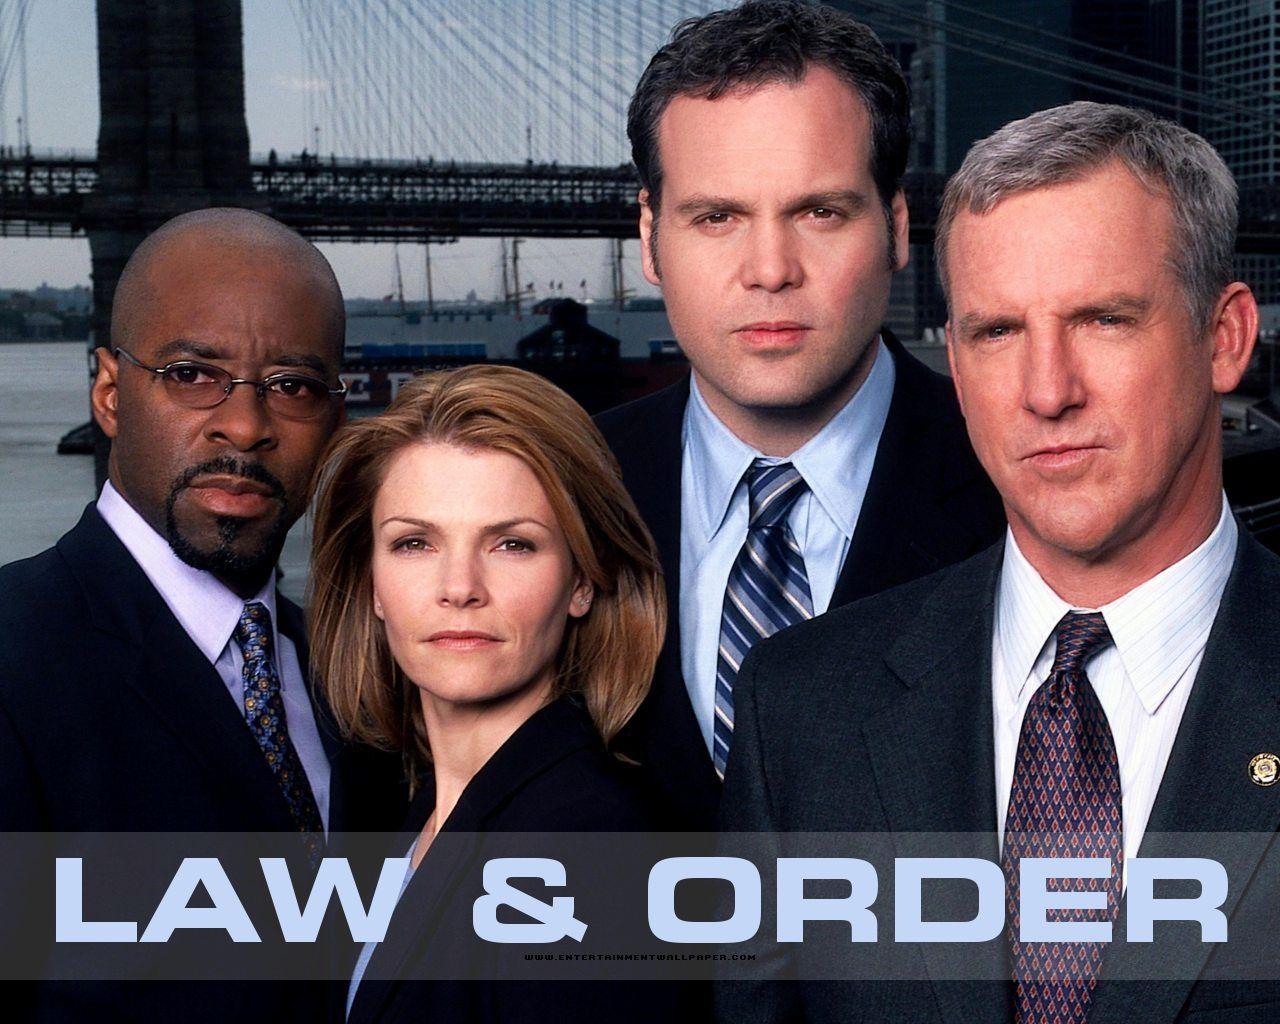 Law & Order: Criminal Intent Wallpaper size, download now